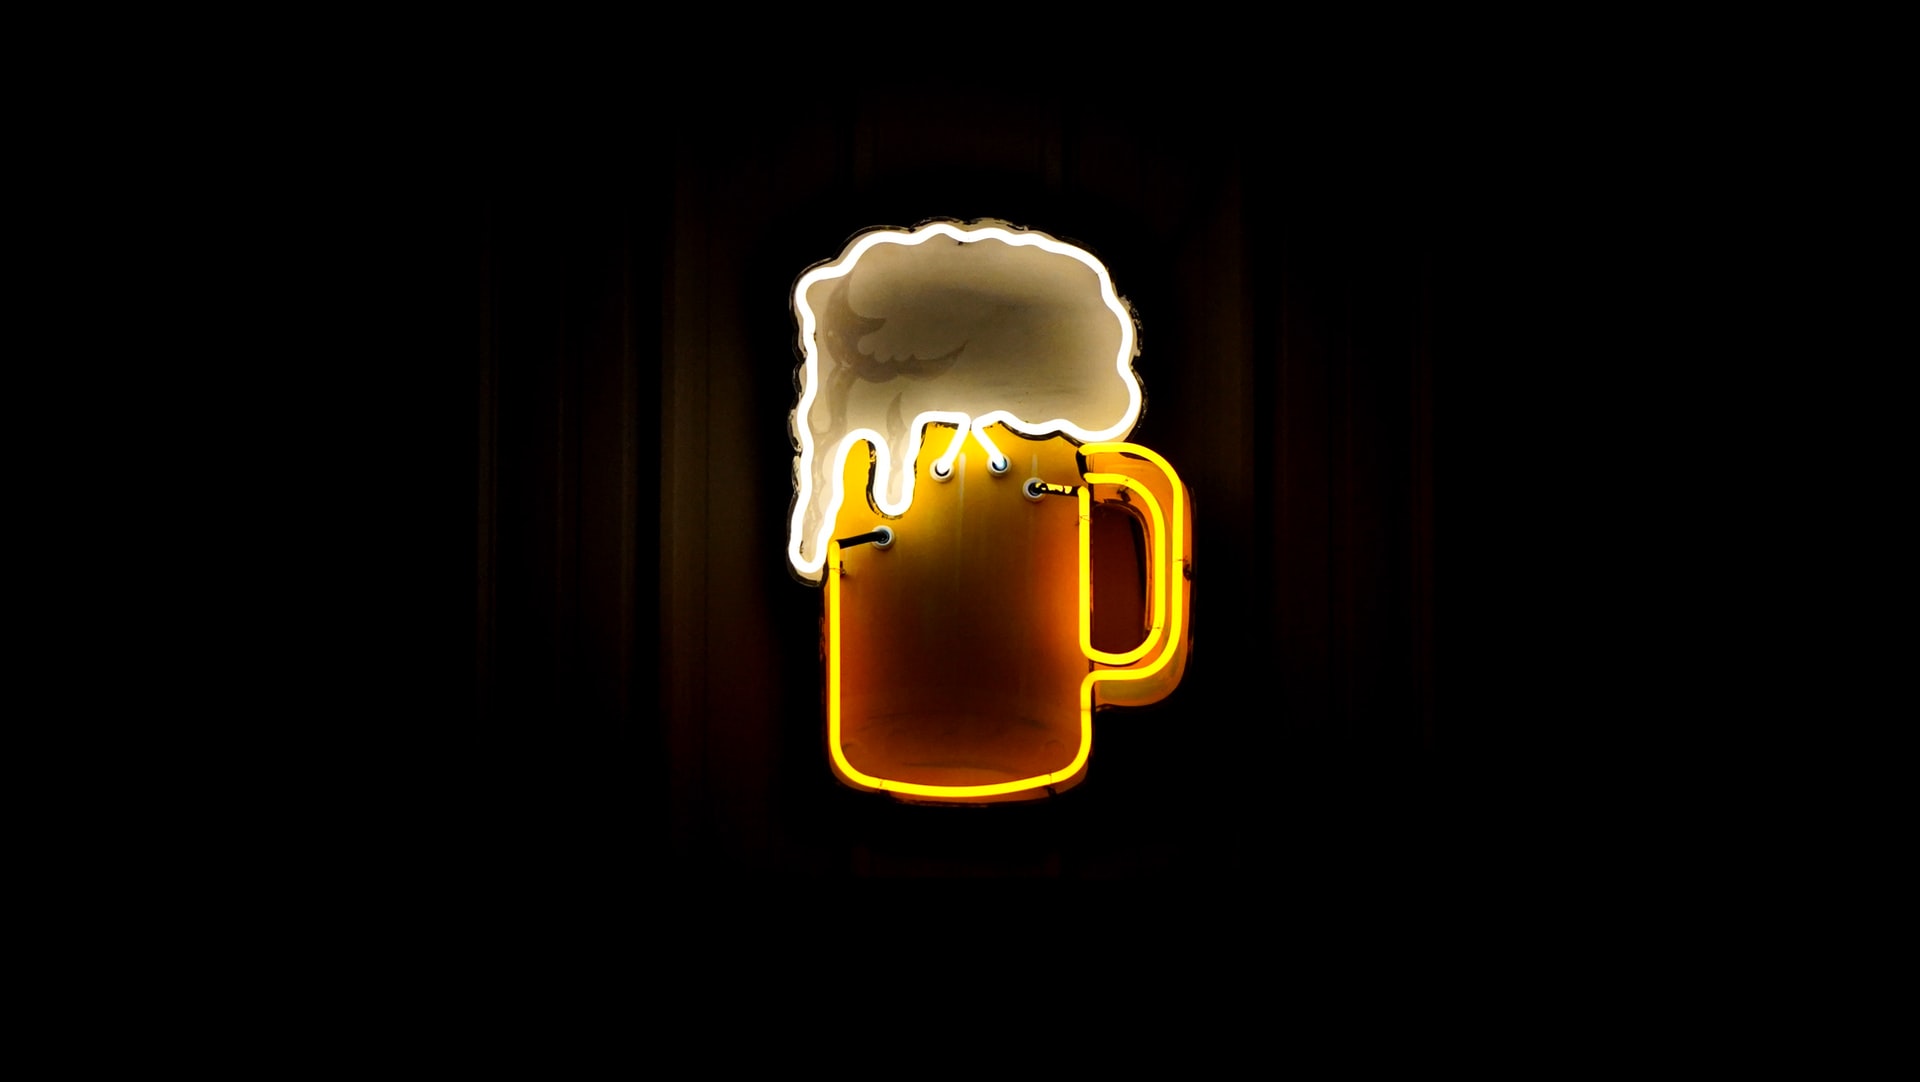 Neon beer mug sign